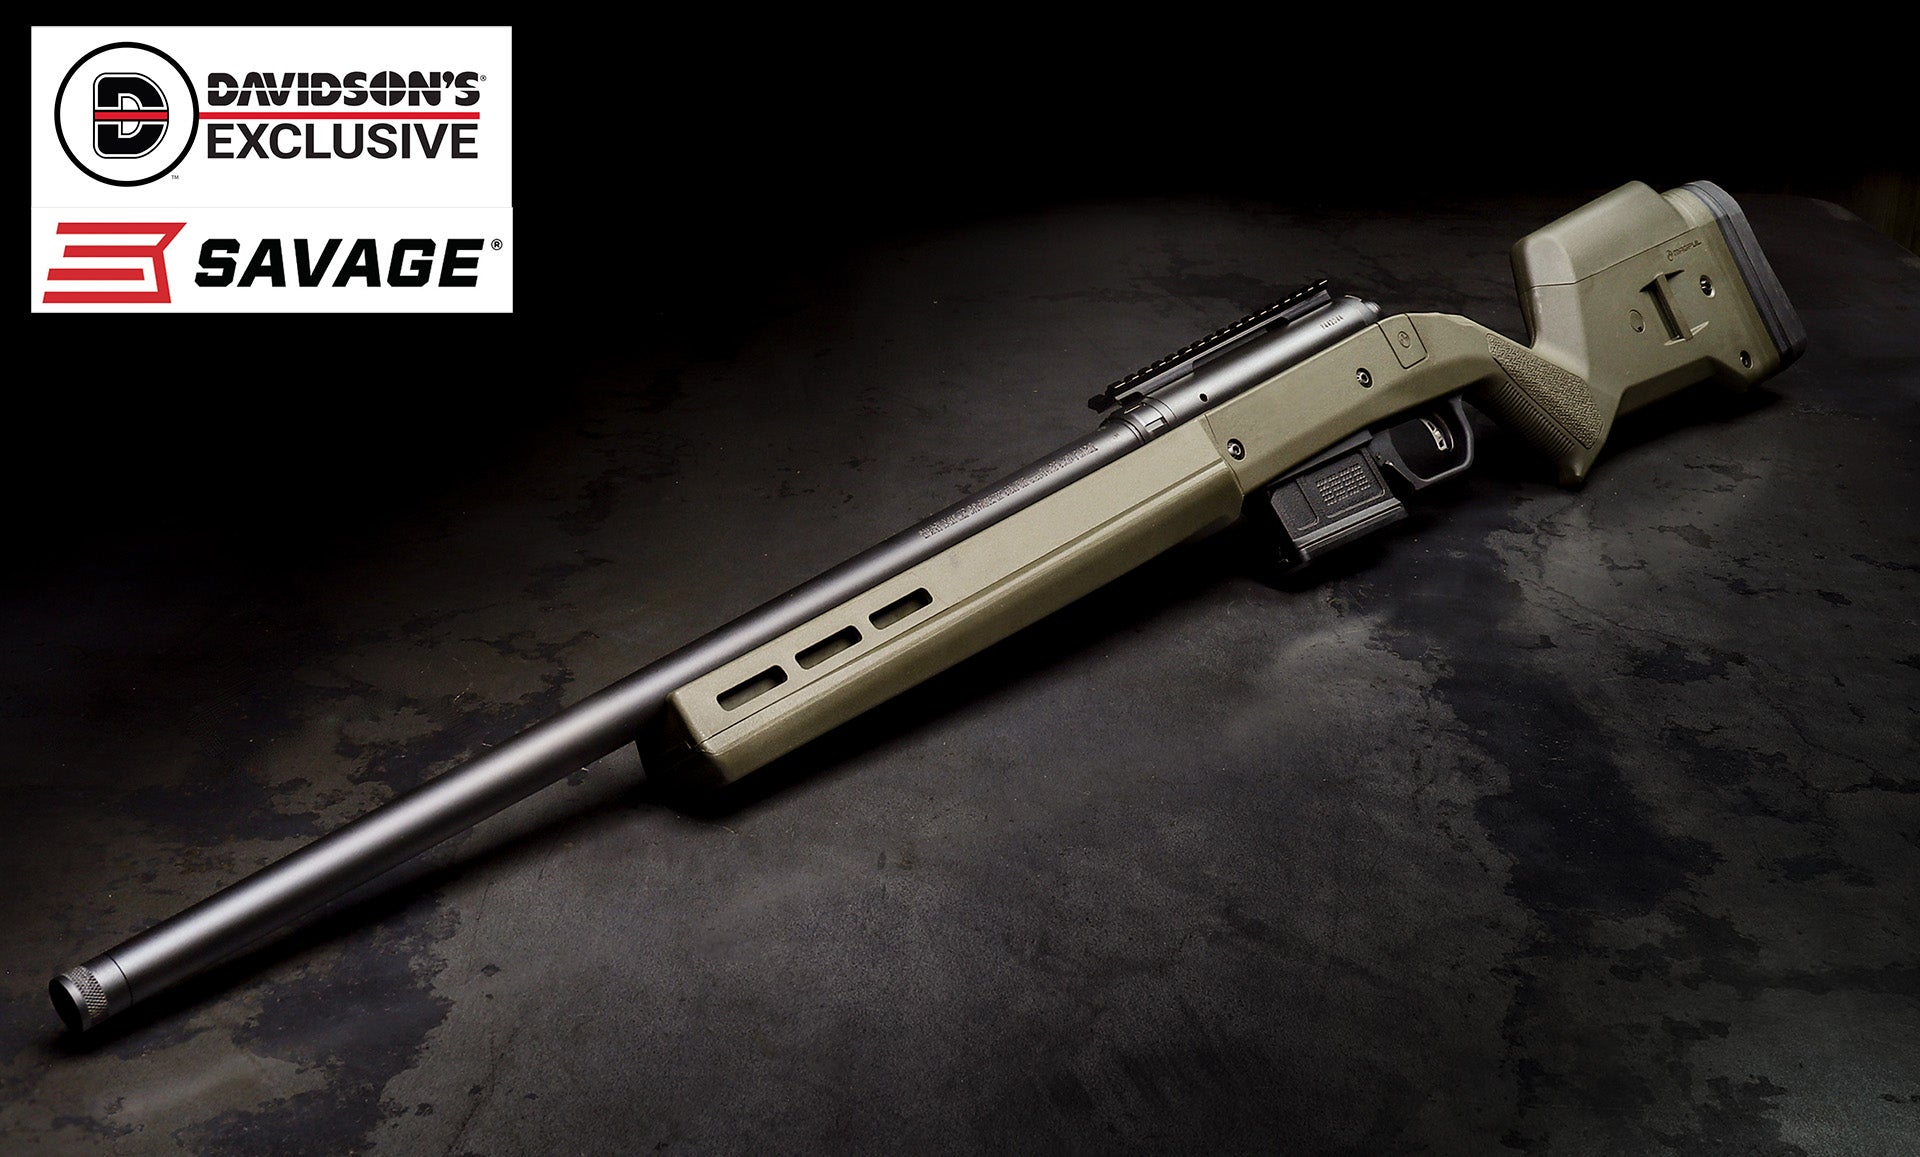 New OD Green Magpul Hunter Savage 110 Rifle from Davidson's